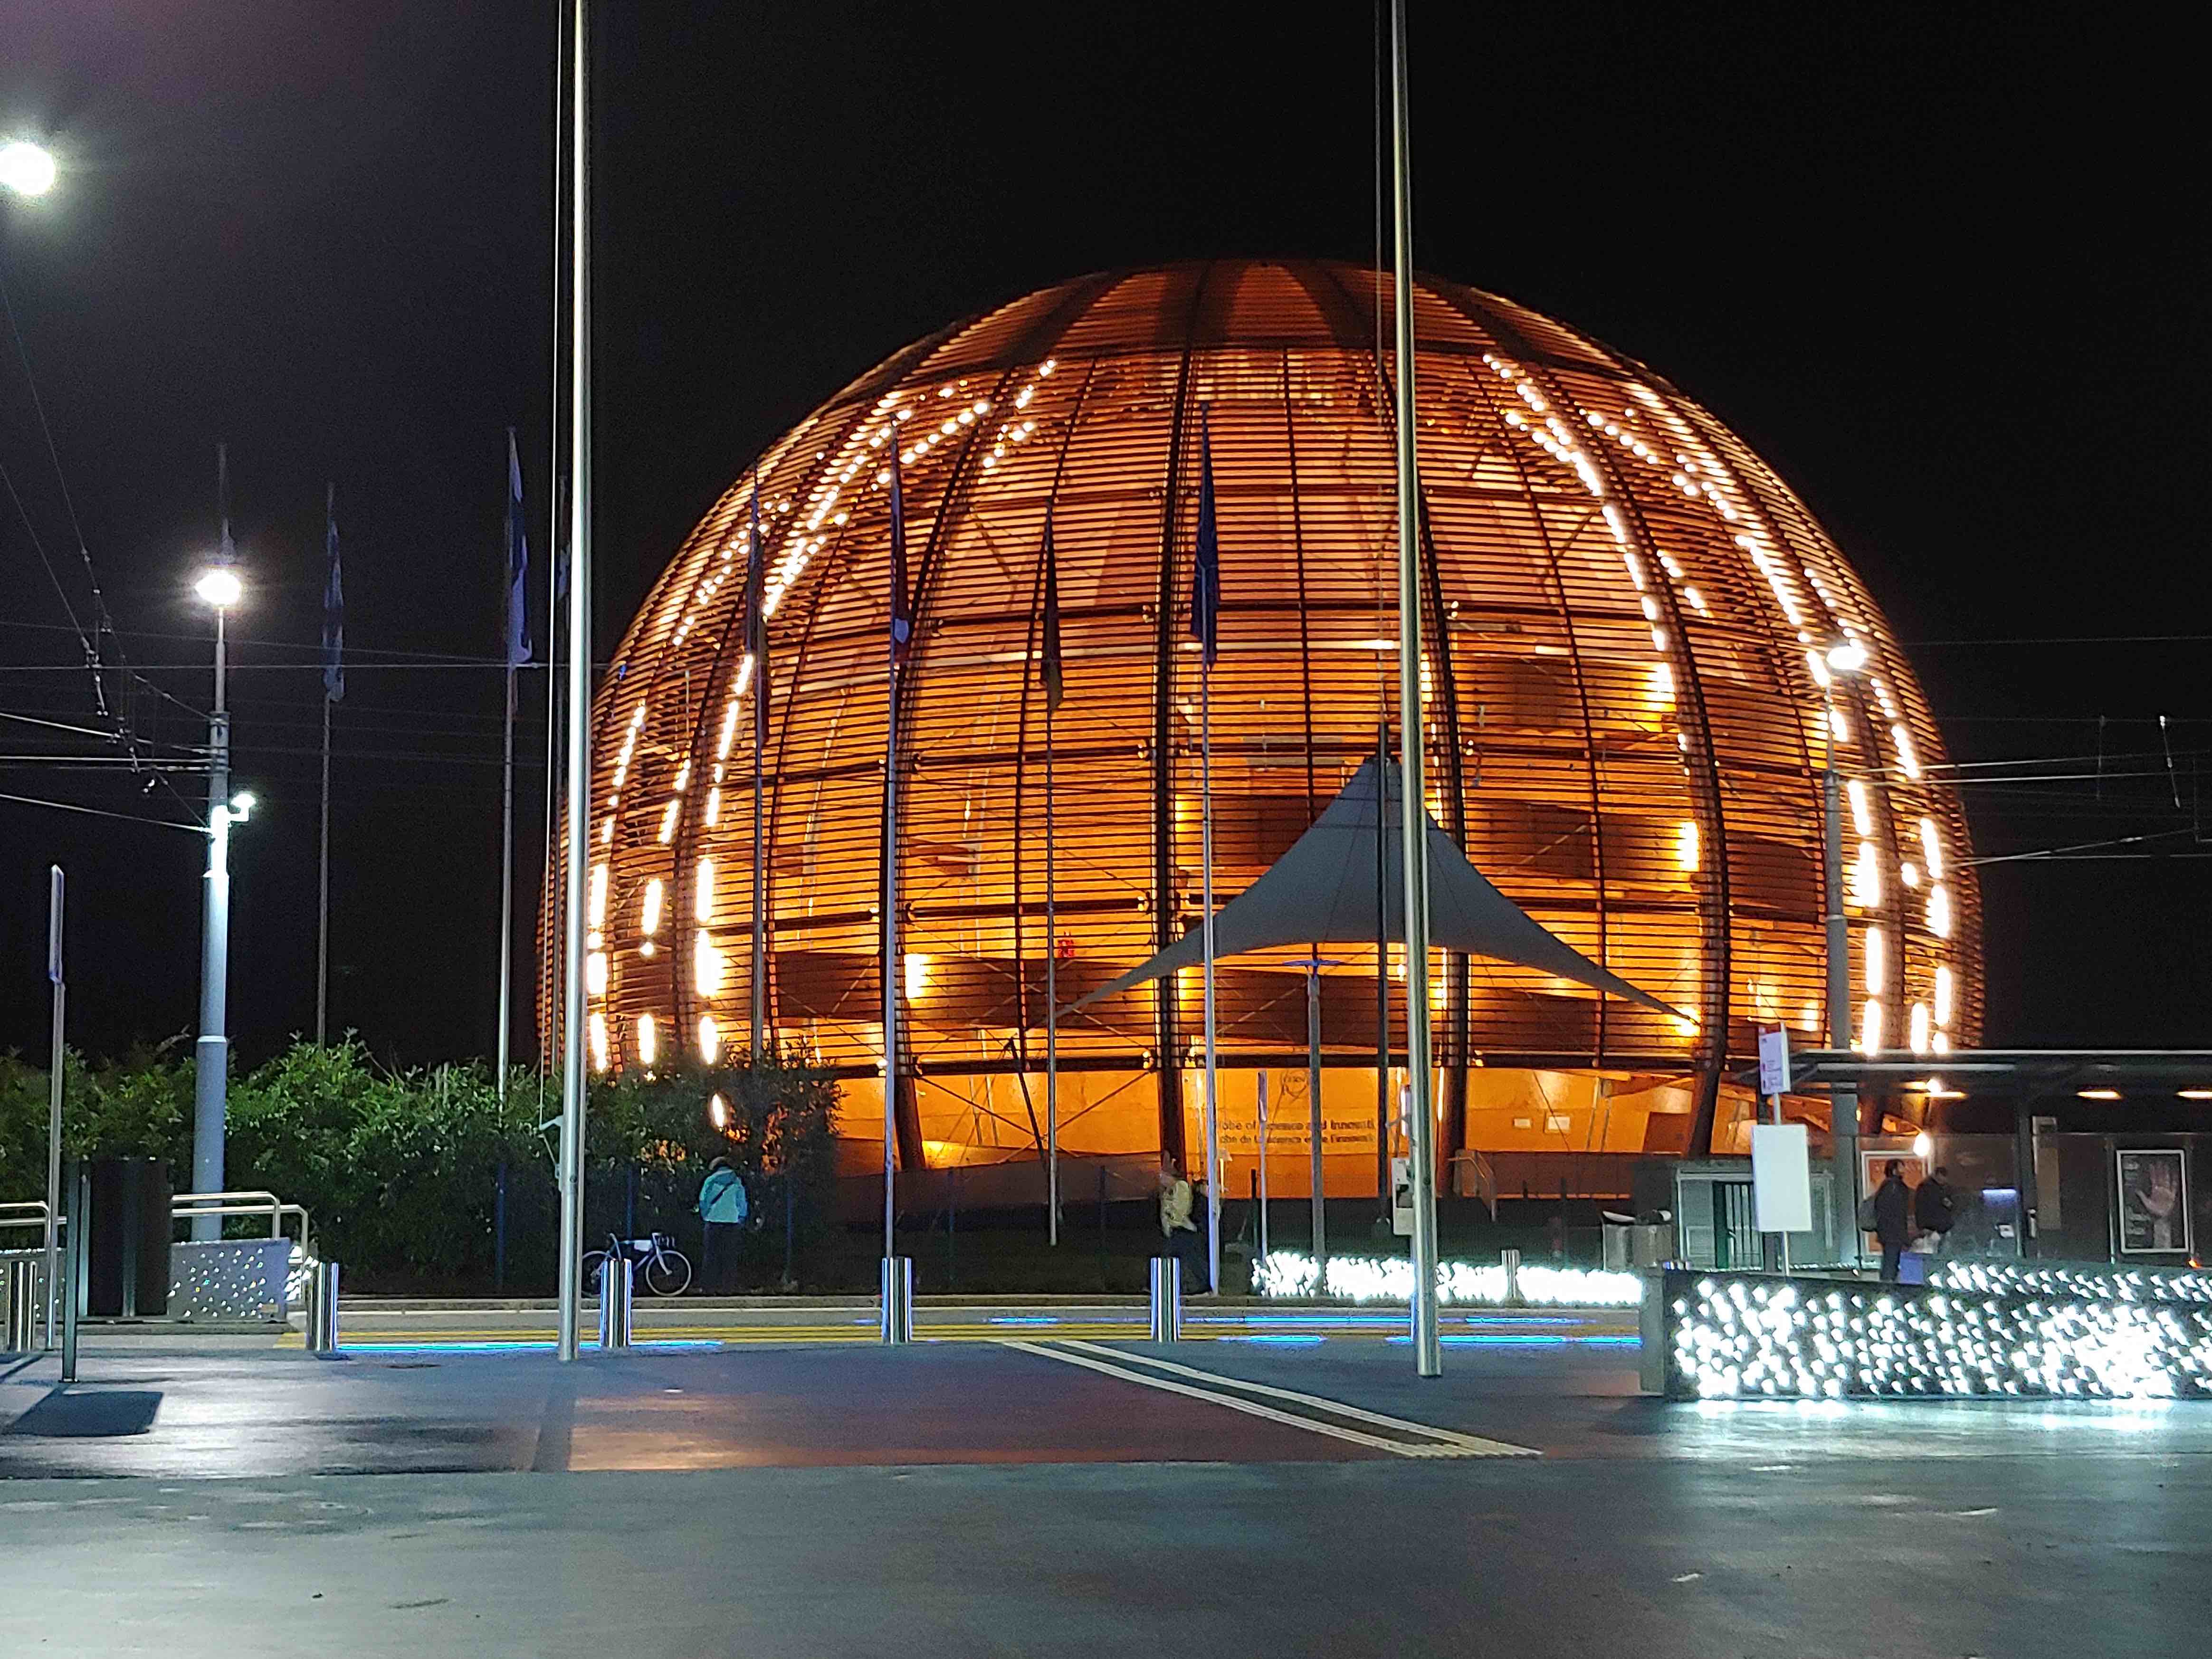 The Globe of Innovation at CERN, photo by Allison Deiana